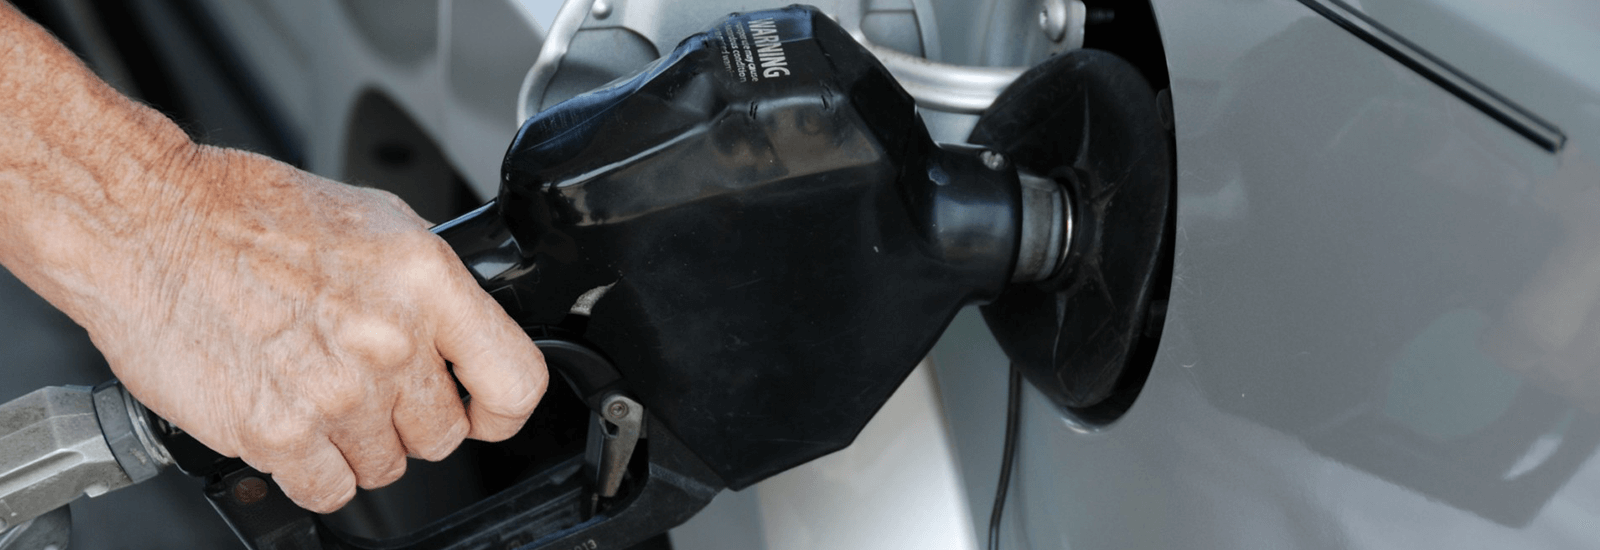 pumping-gasoline